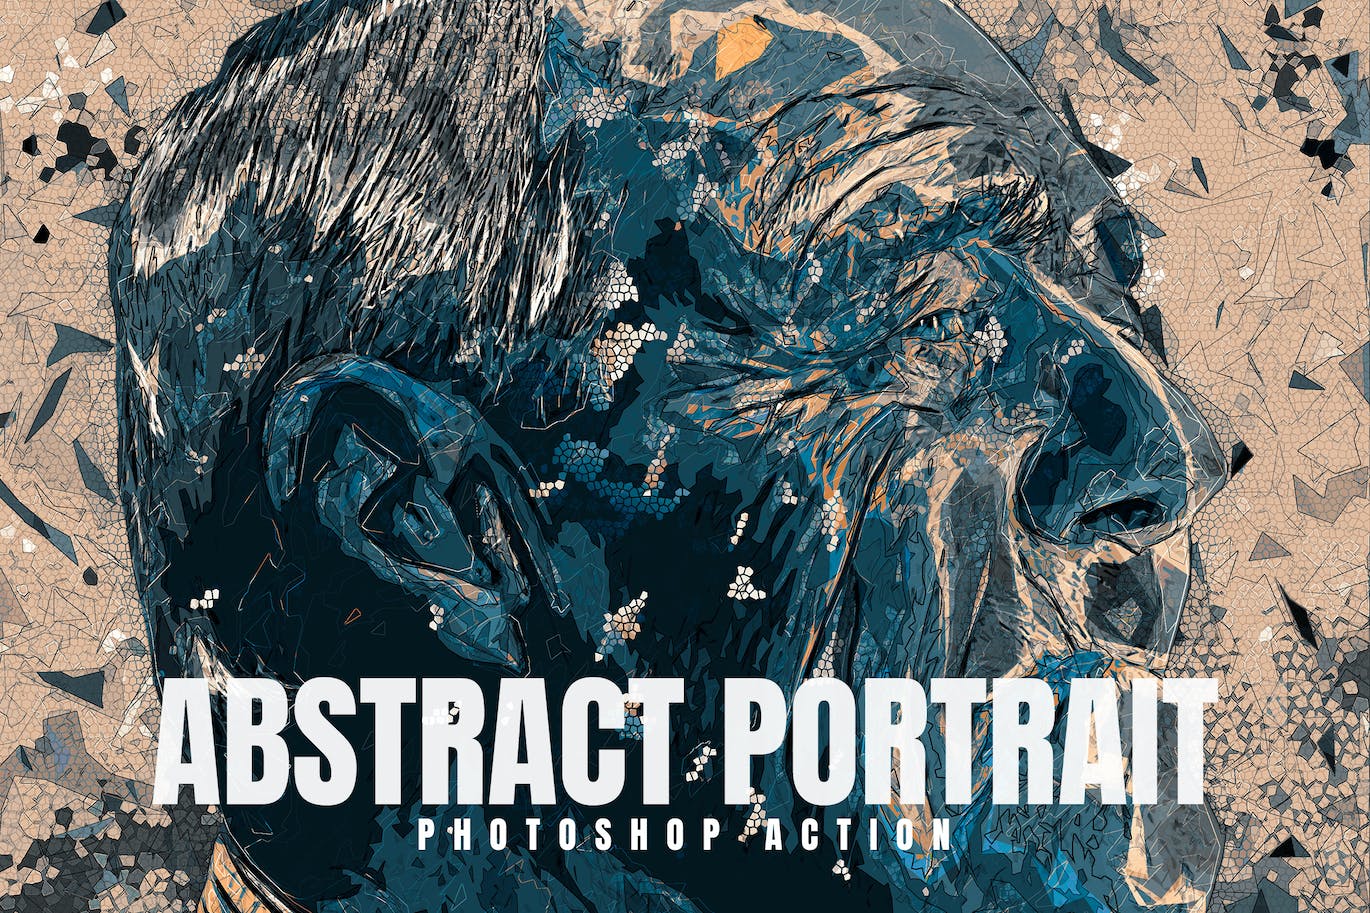 抽象肖像照片处理效果PS动作模板 Abstract Portrait – Photoshop Action 插件预设 第1张